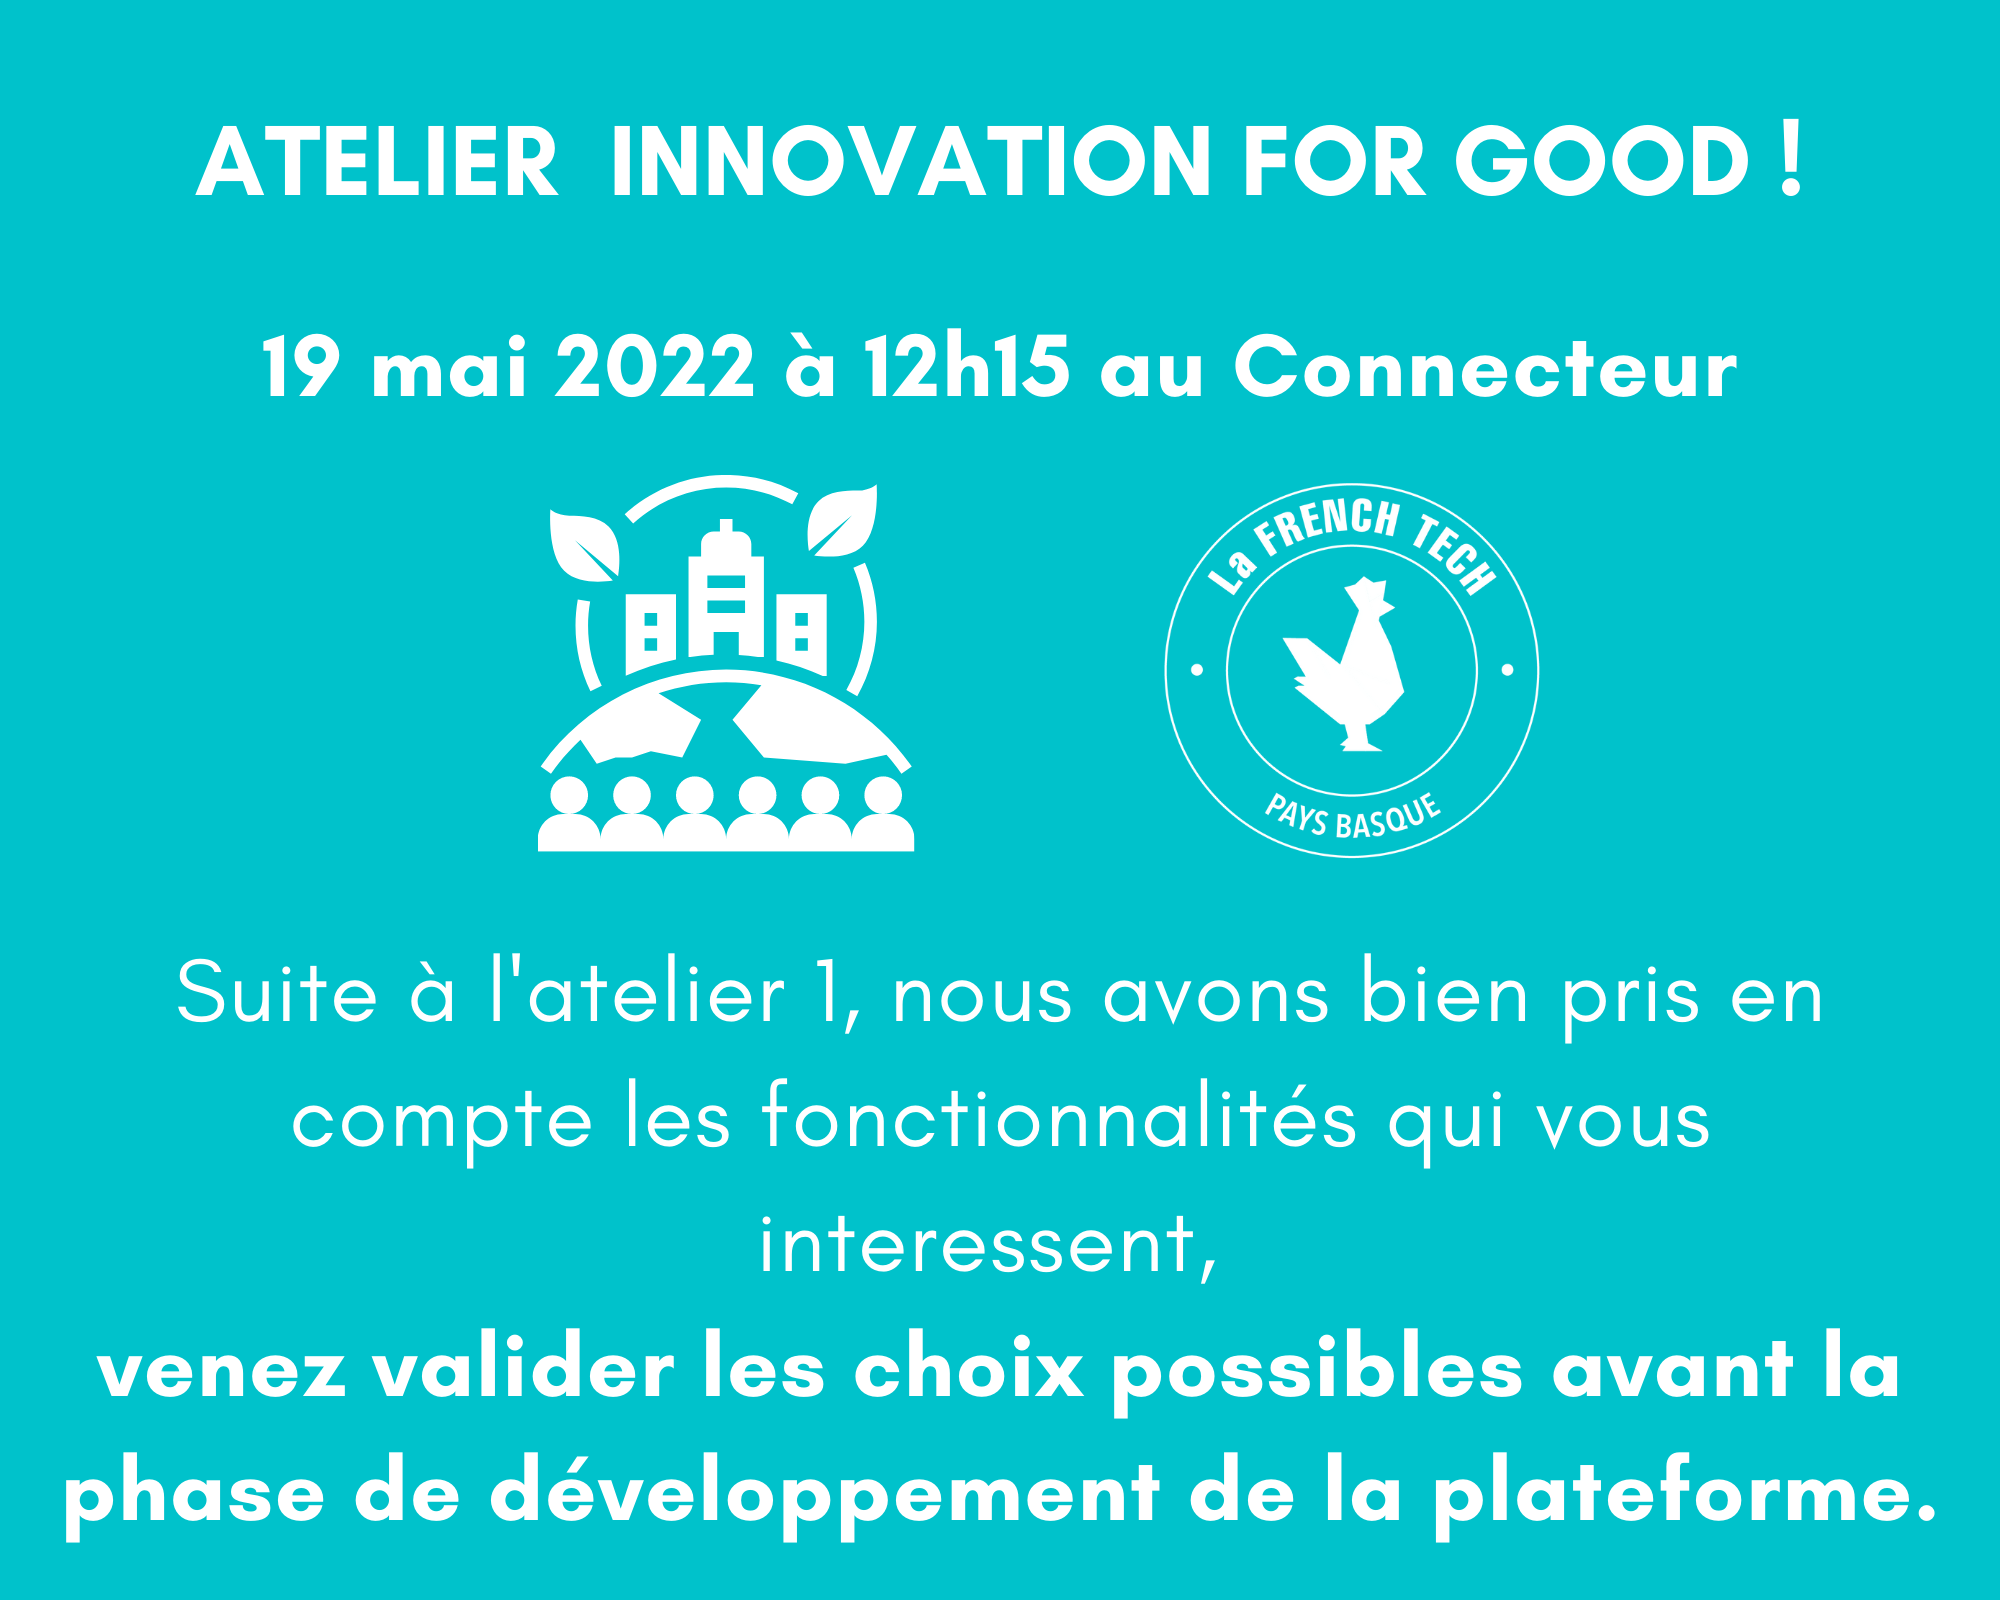 Atelier adhérents - Innovation for good